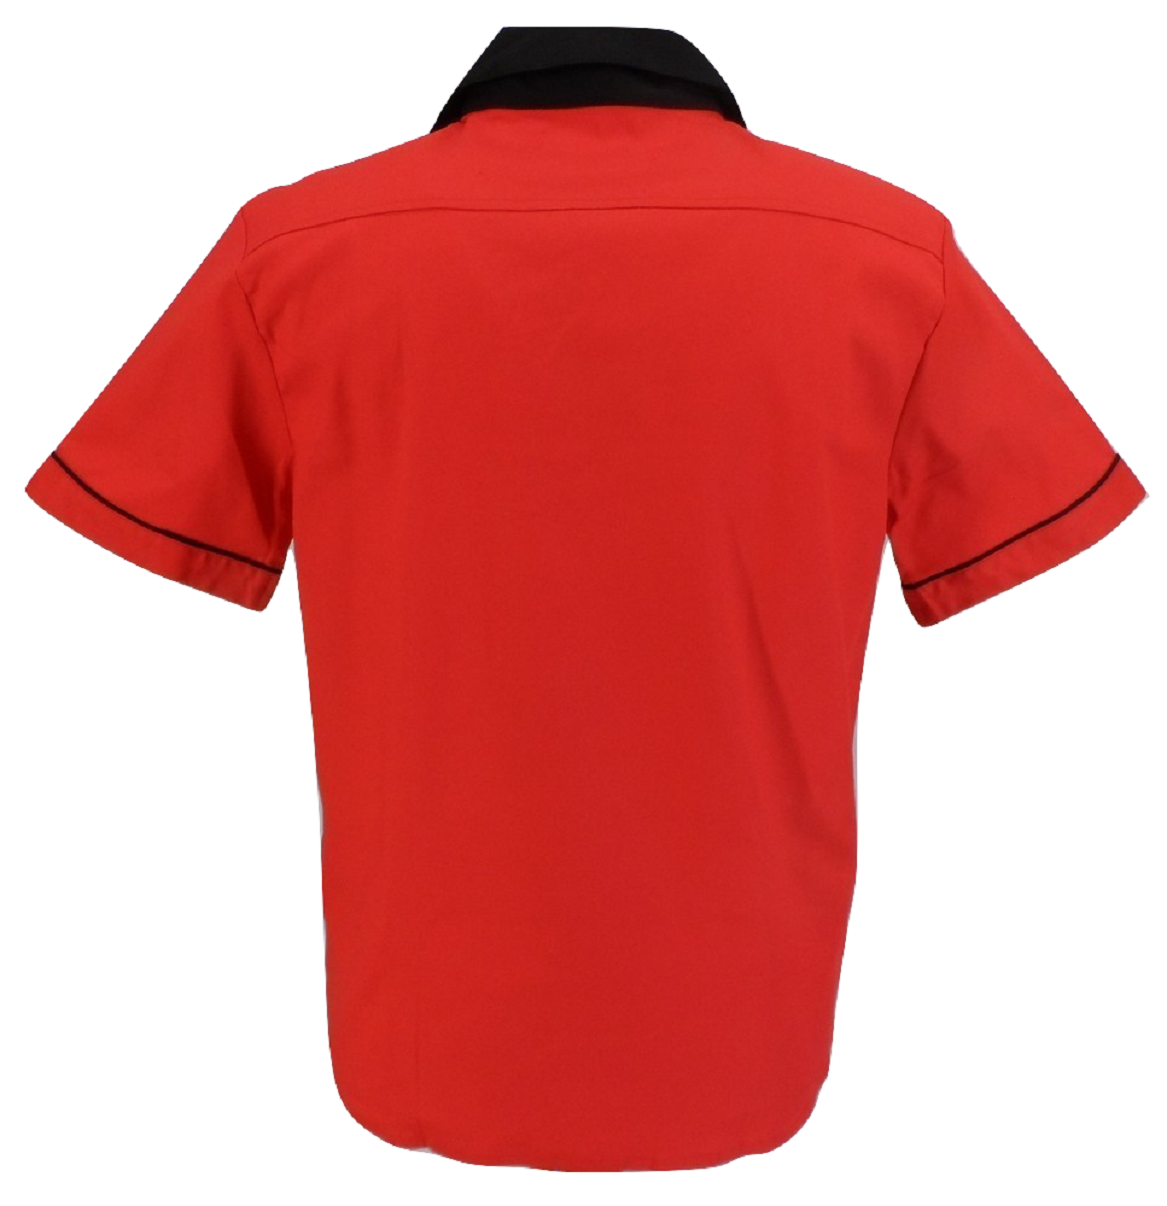 Bowling Shirts روكابيلي الحمراء الرجعية للرجال Mazeys